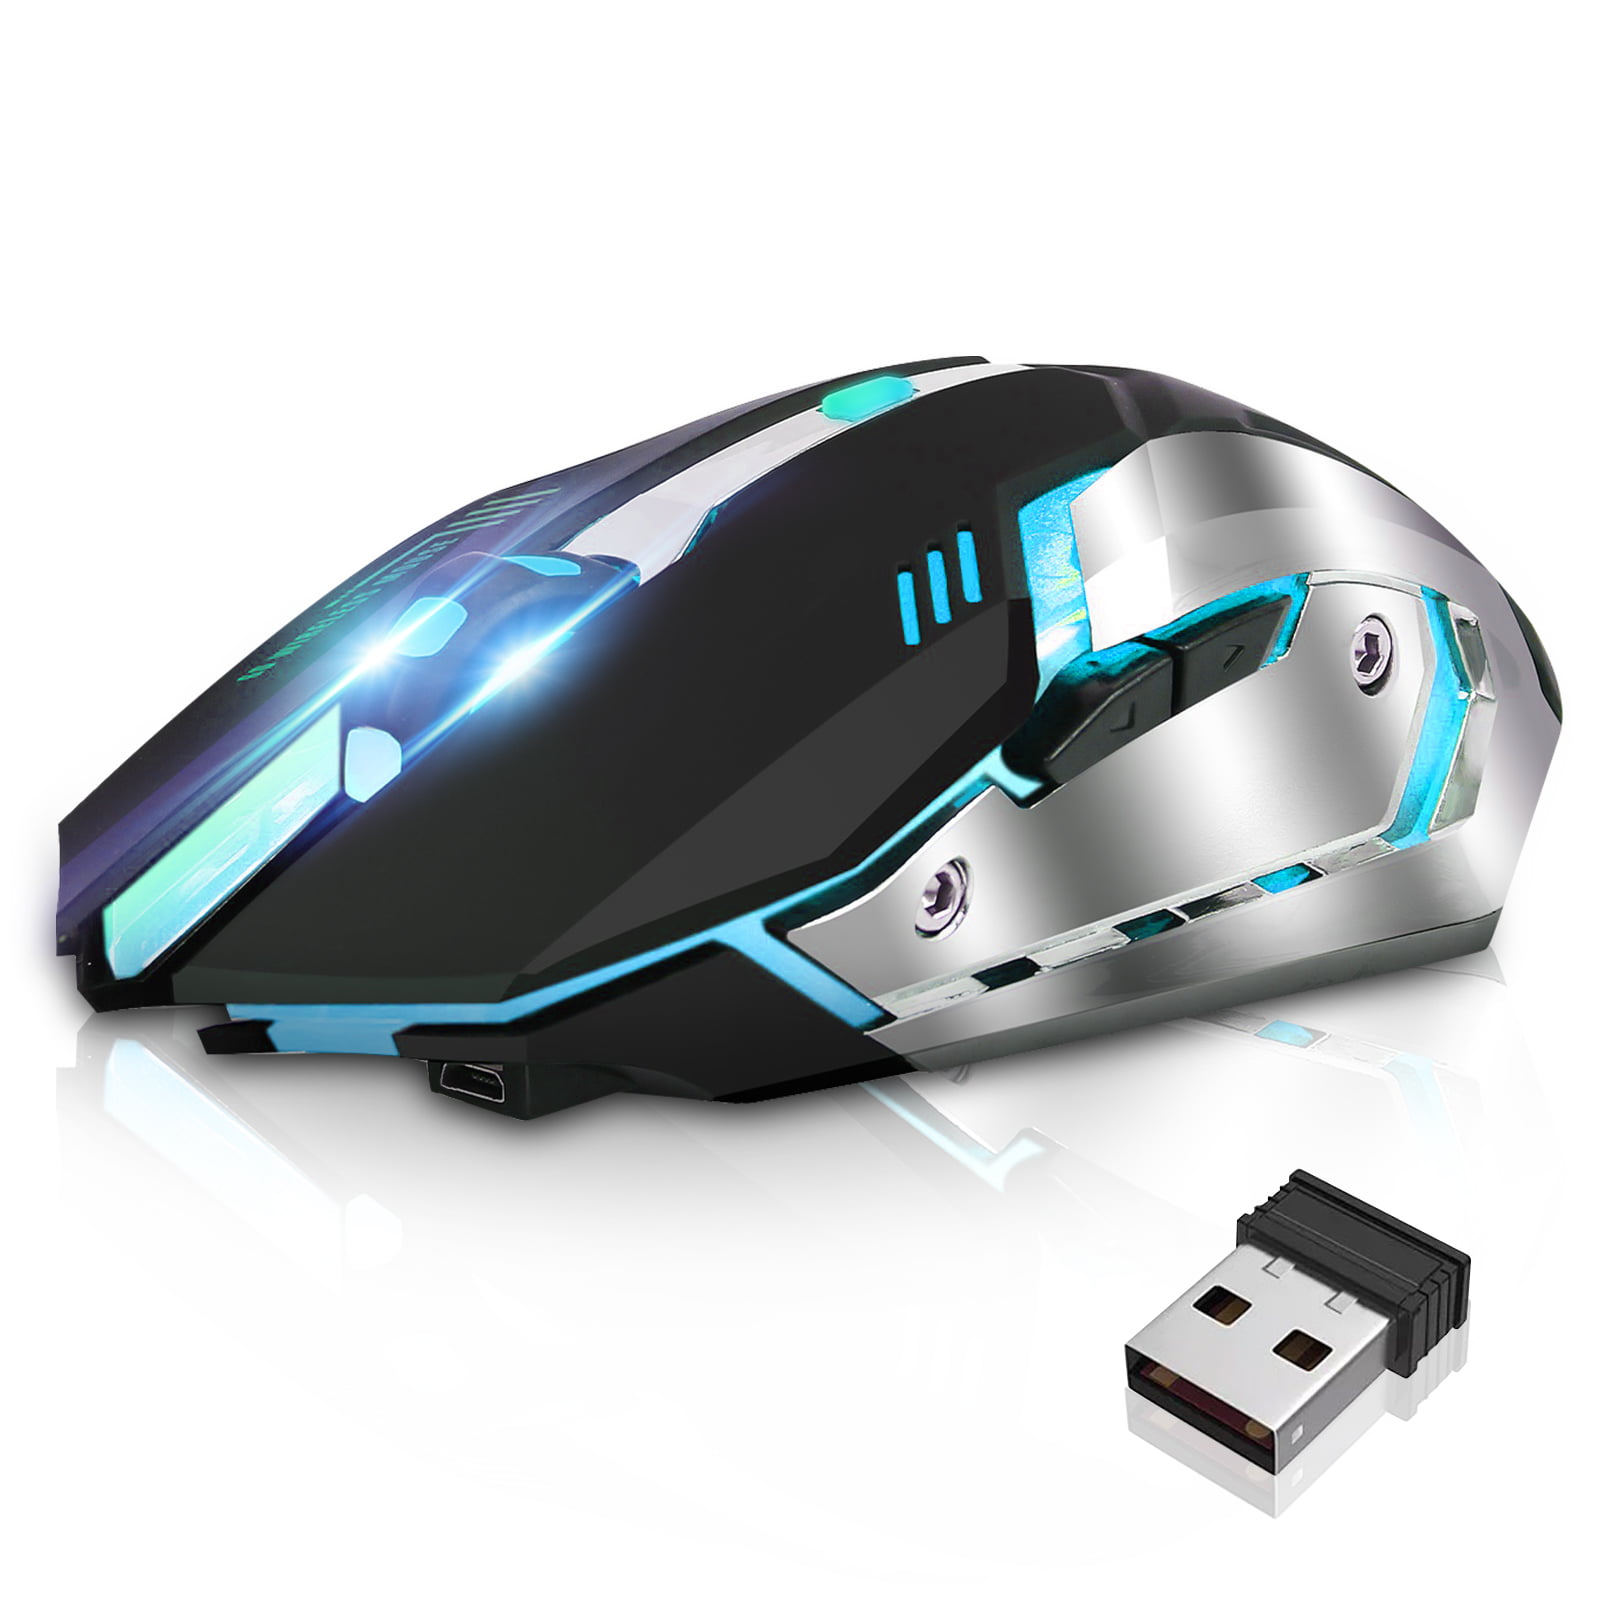 2.4G Hz 6D 1600DPI USB Wireless Optical Gaming Mouse Mice For Laptop Desktop Lot 